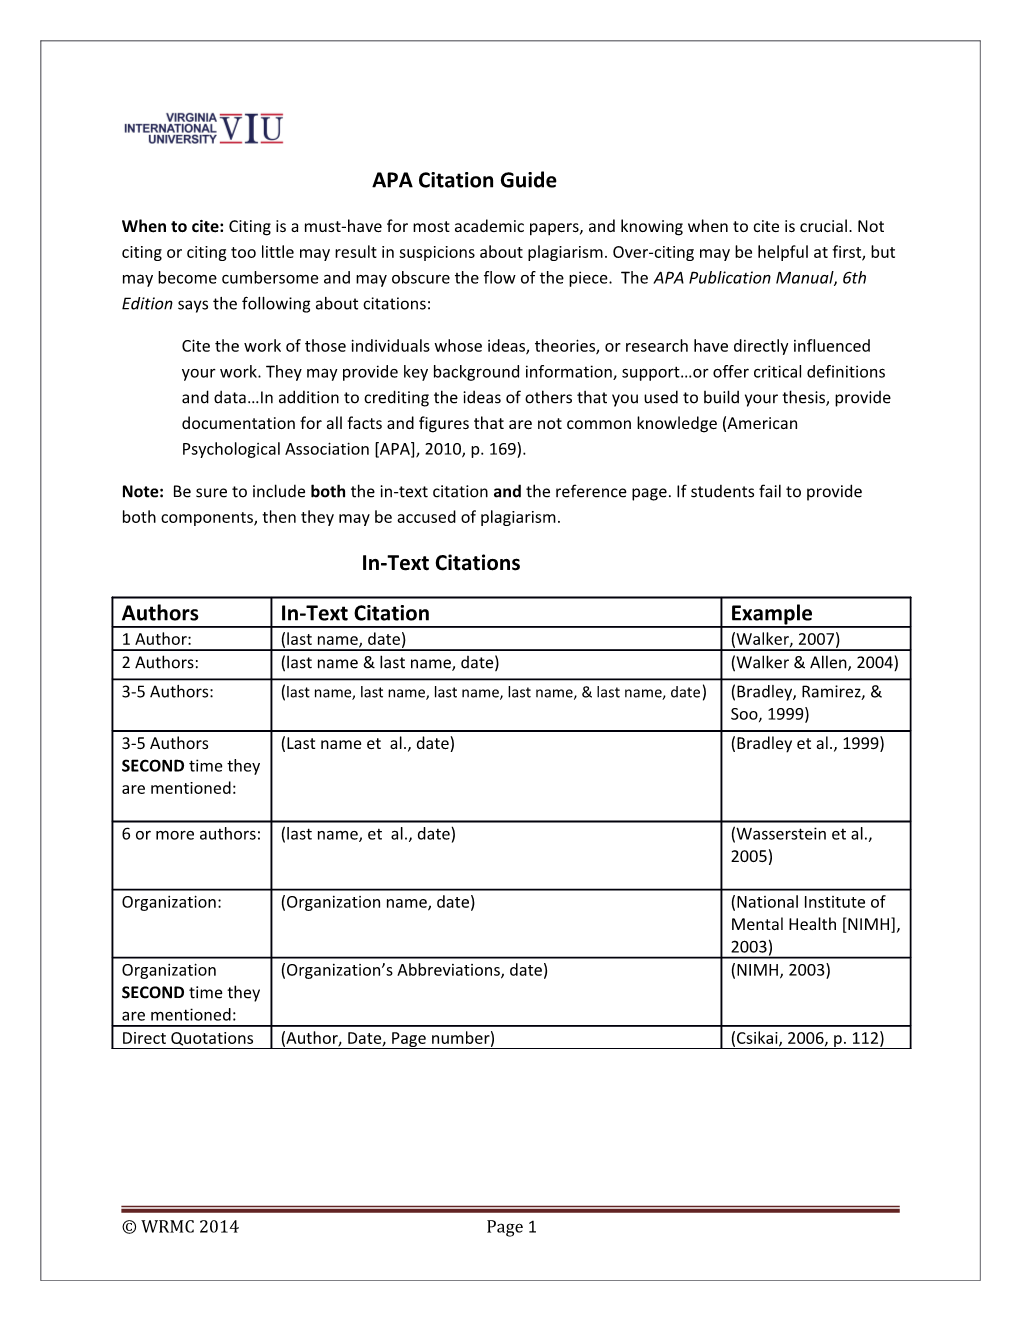 APA Citation Guide s2